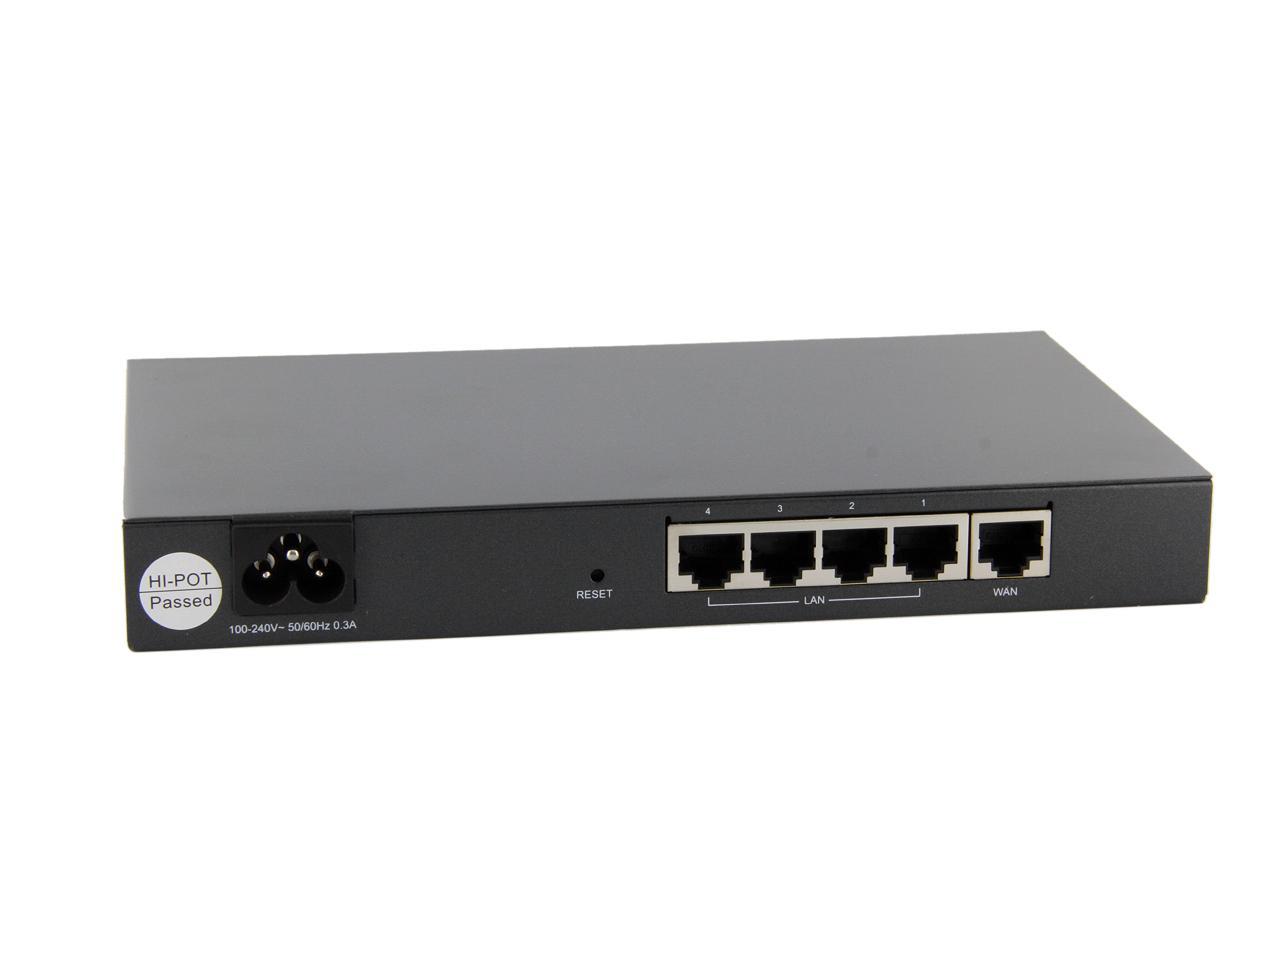 tp-link tl-r600vpn safestreamtm gigabit broadband vpn router